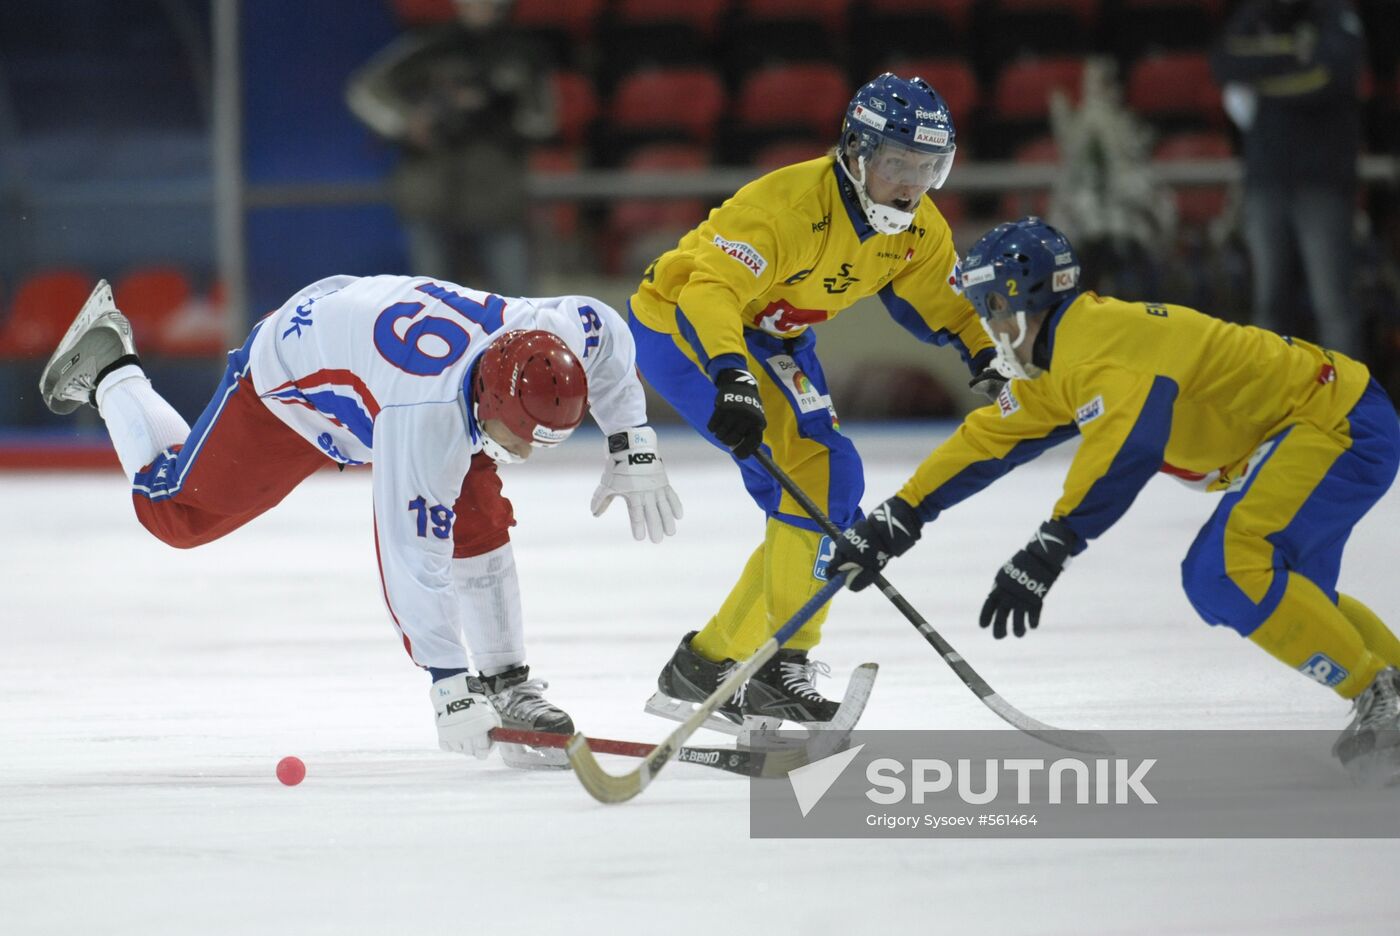 World Bandy Championship, Russia vs. Sweden